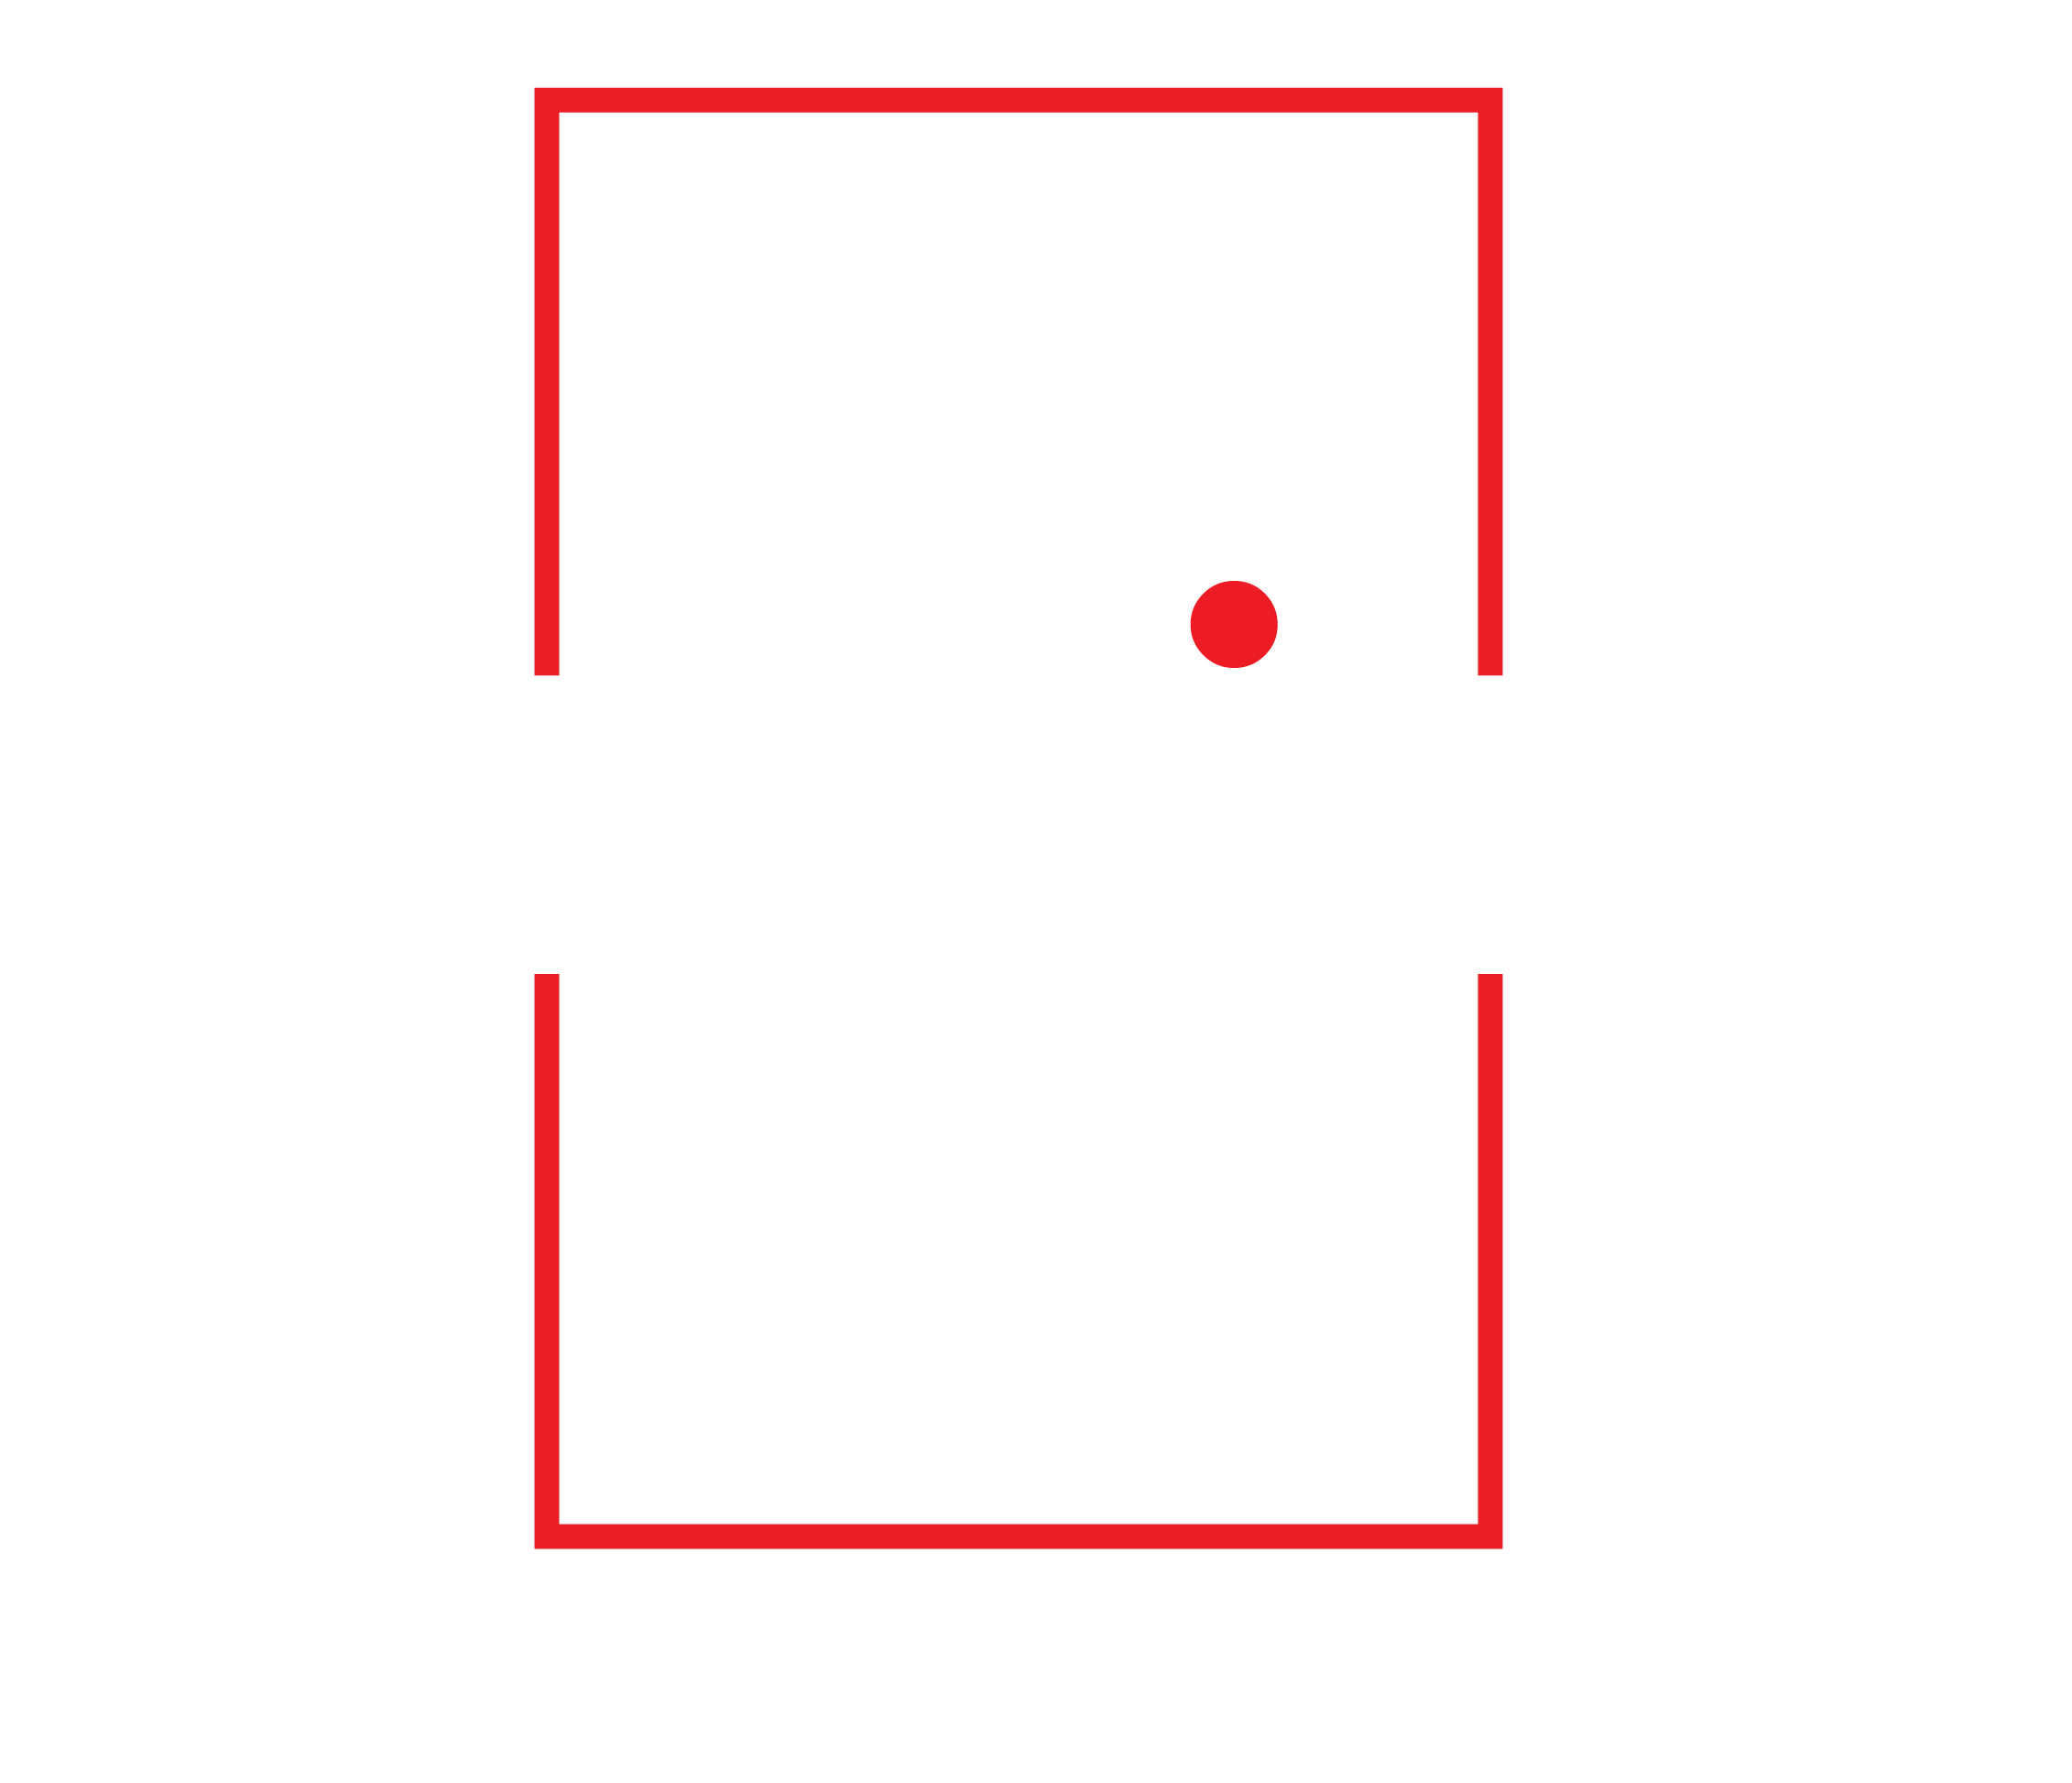 Romina PLC